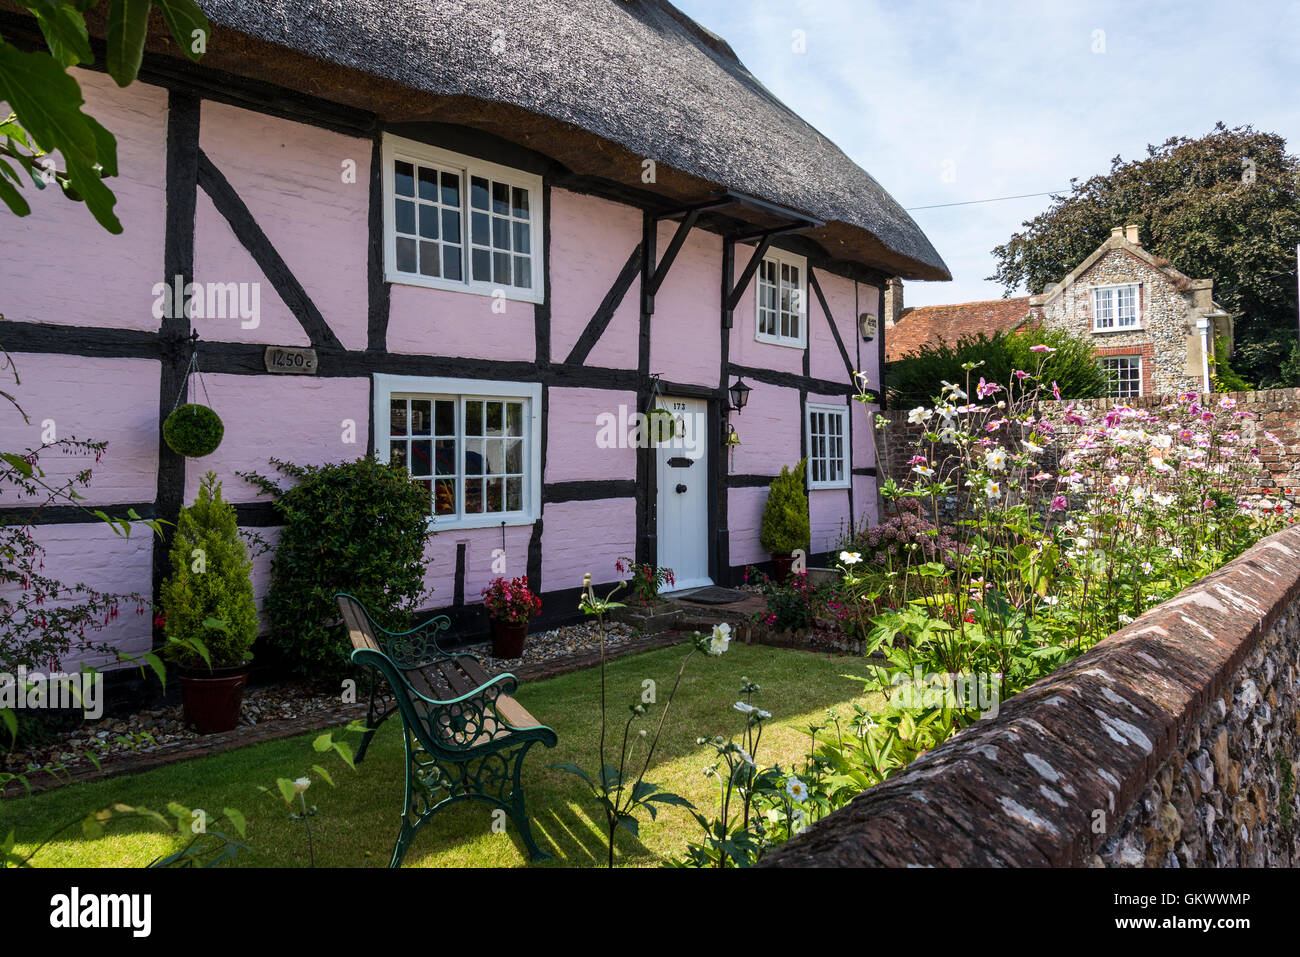 Portchester, malerisches Dorf in Hampshire, England, UK Stockfoto